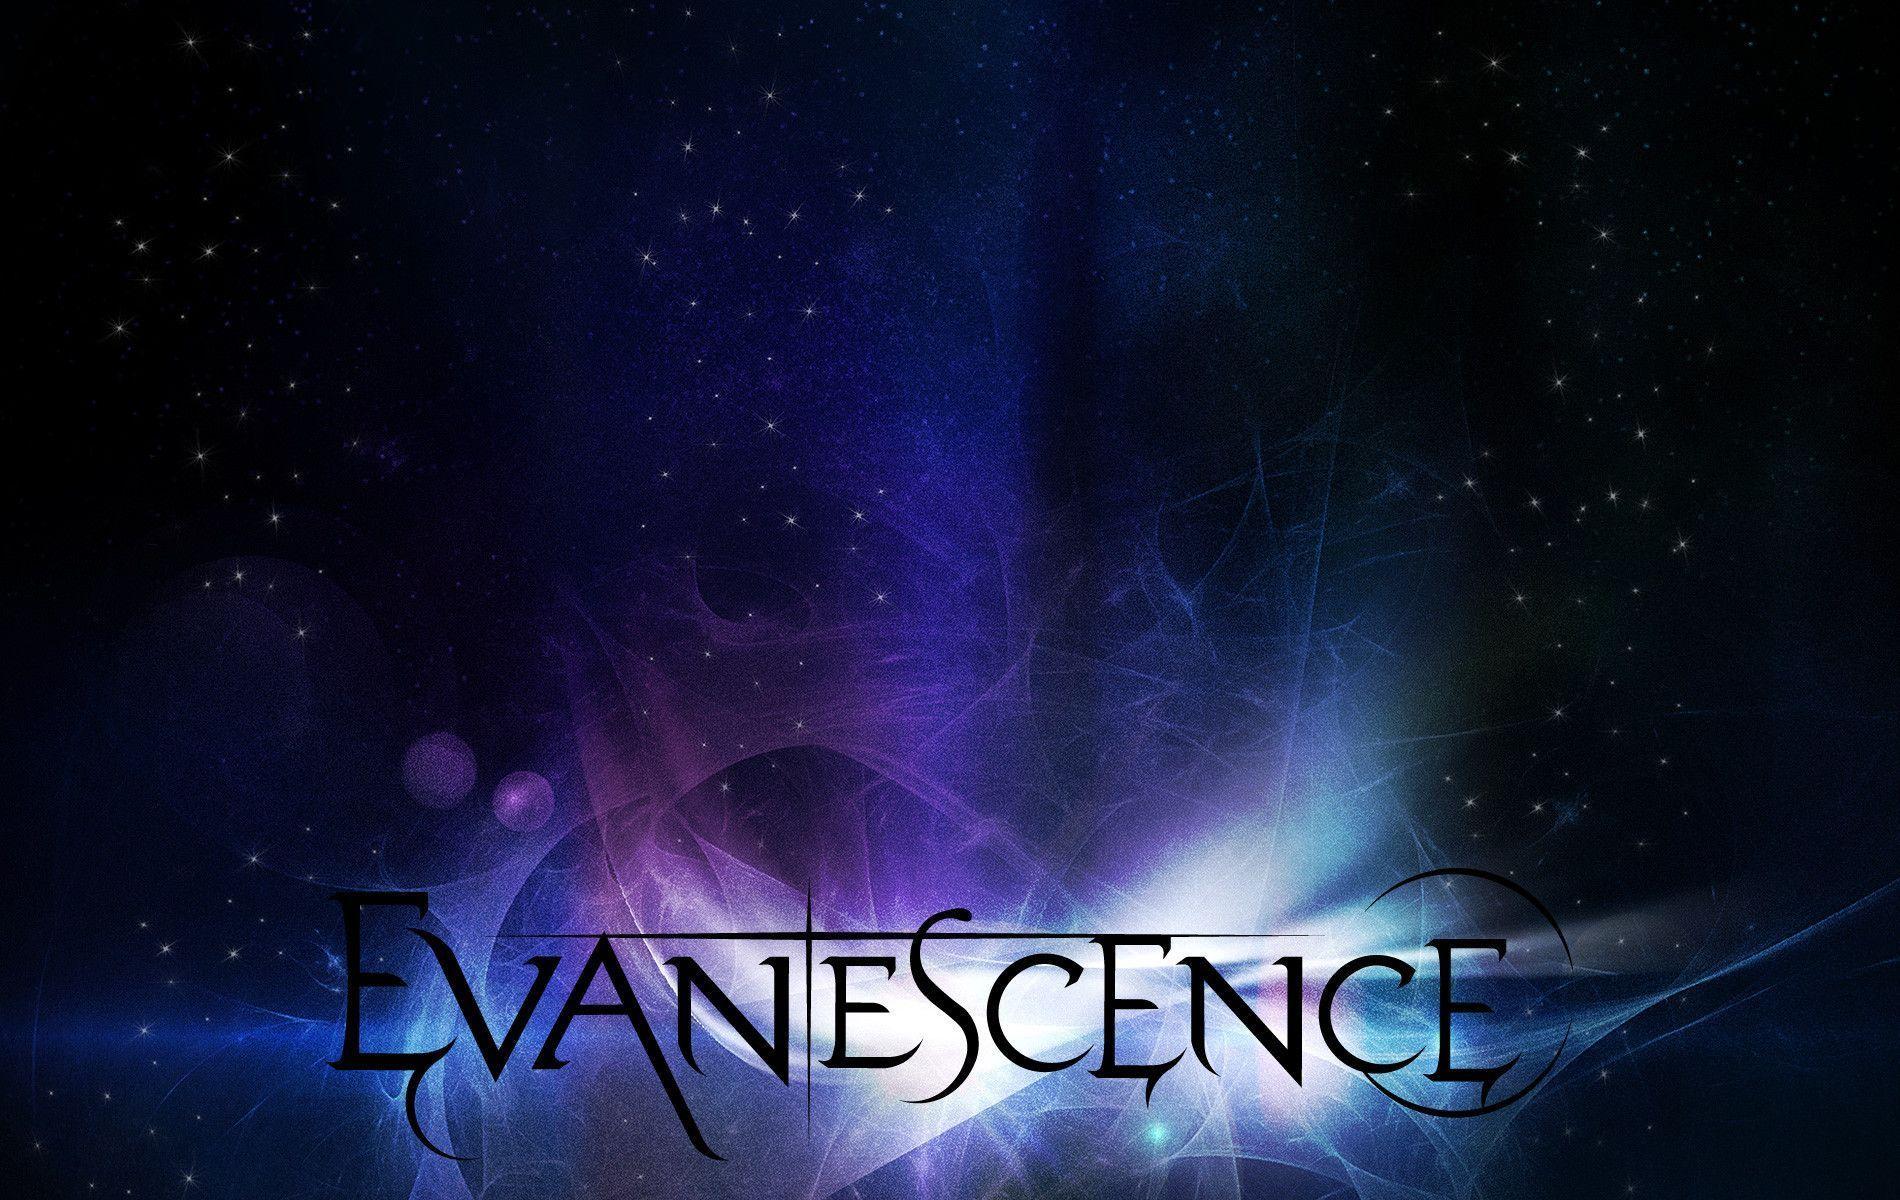 Wallpaper.wiki Desktop Evanescence Picture PIC WPB006130